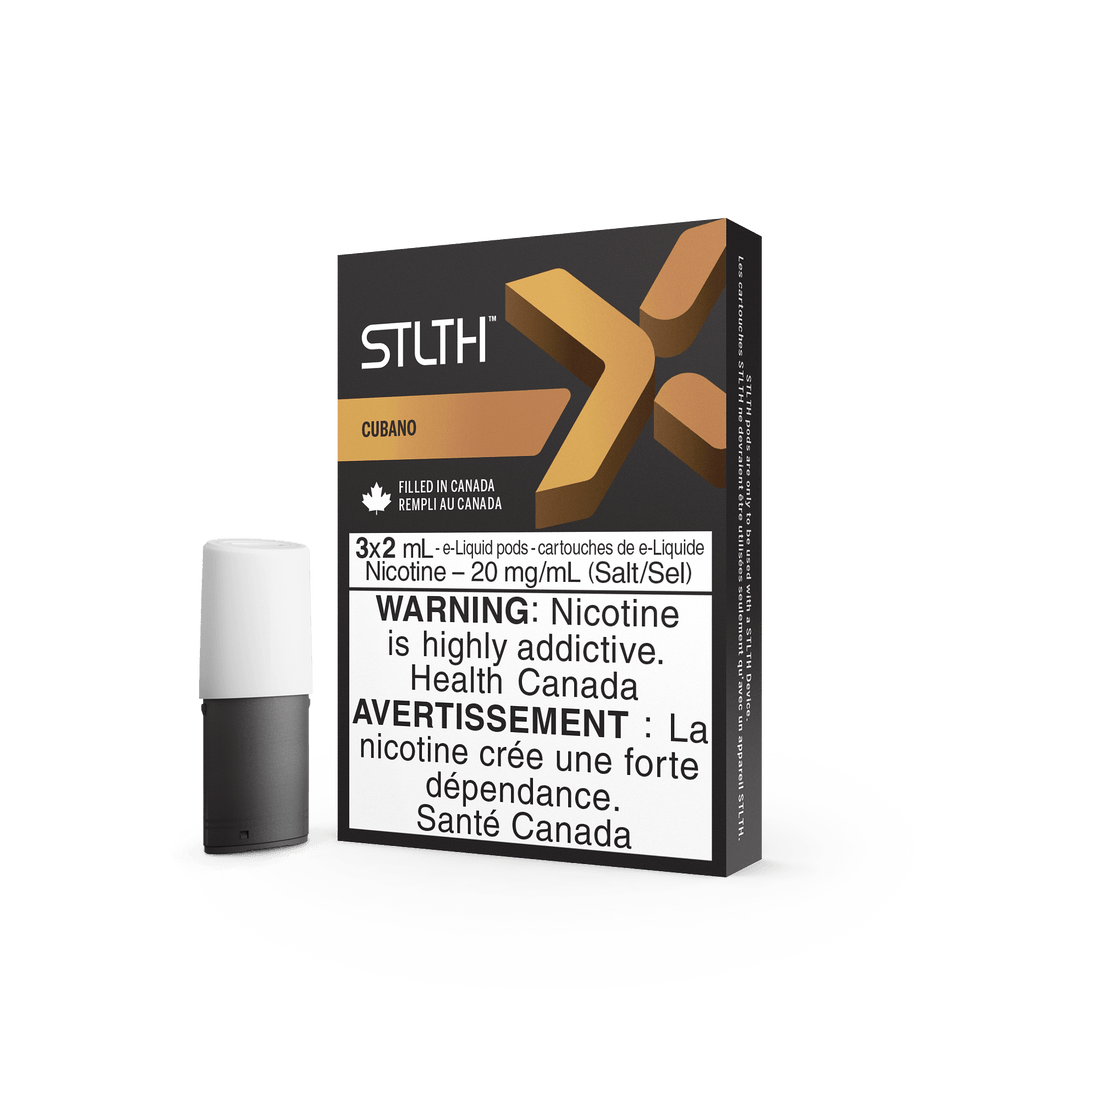 STLTH X - Cubano - Vapor Shoppe